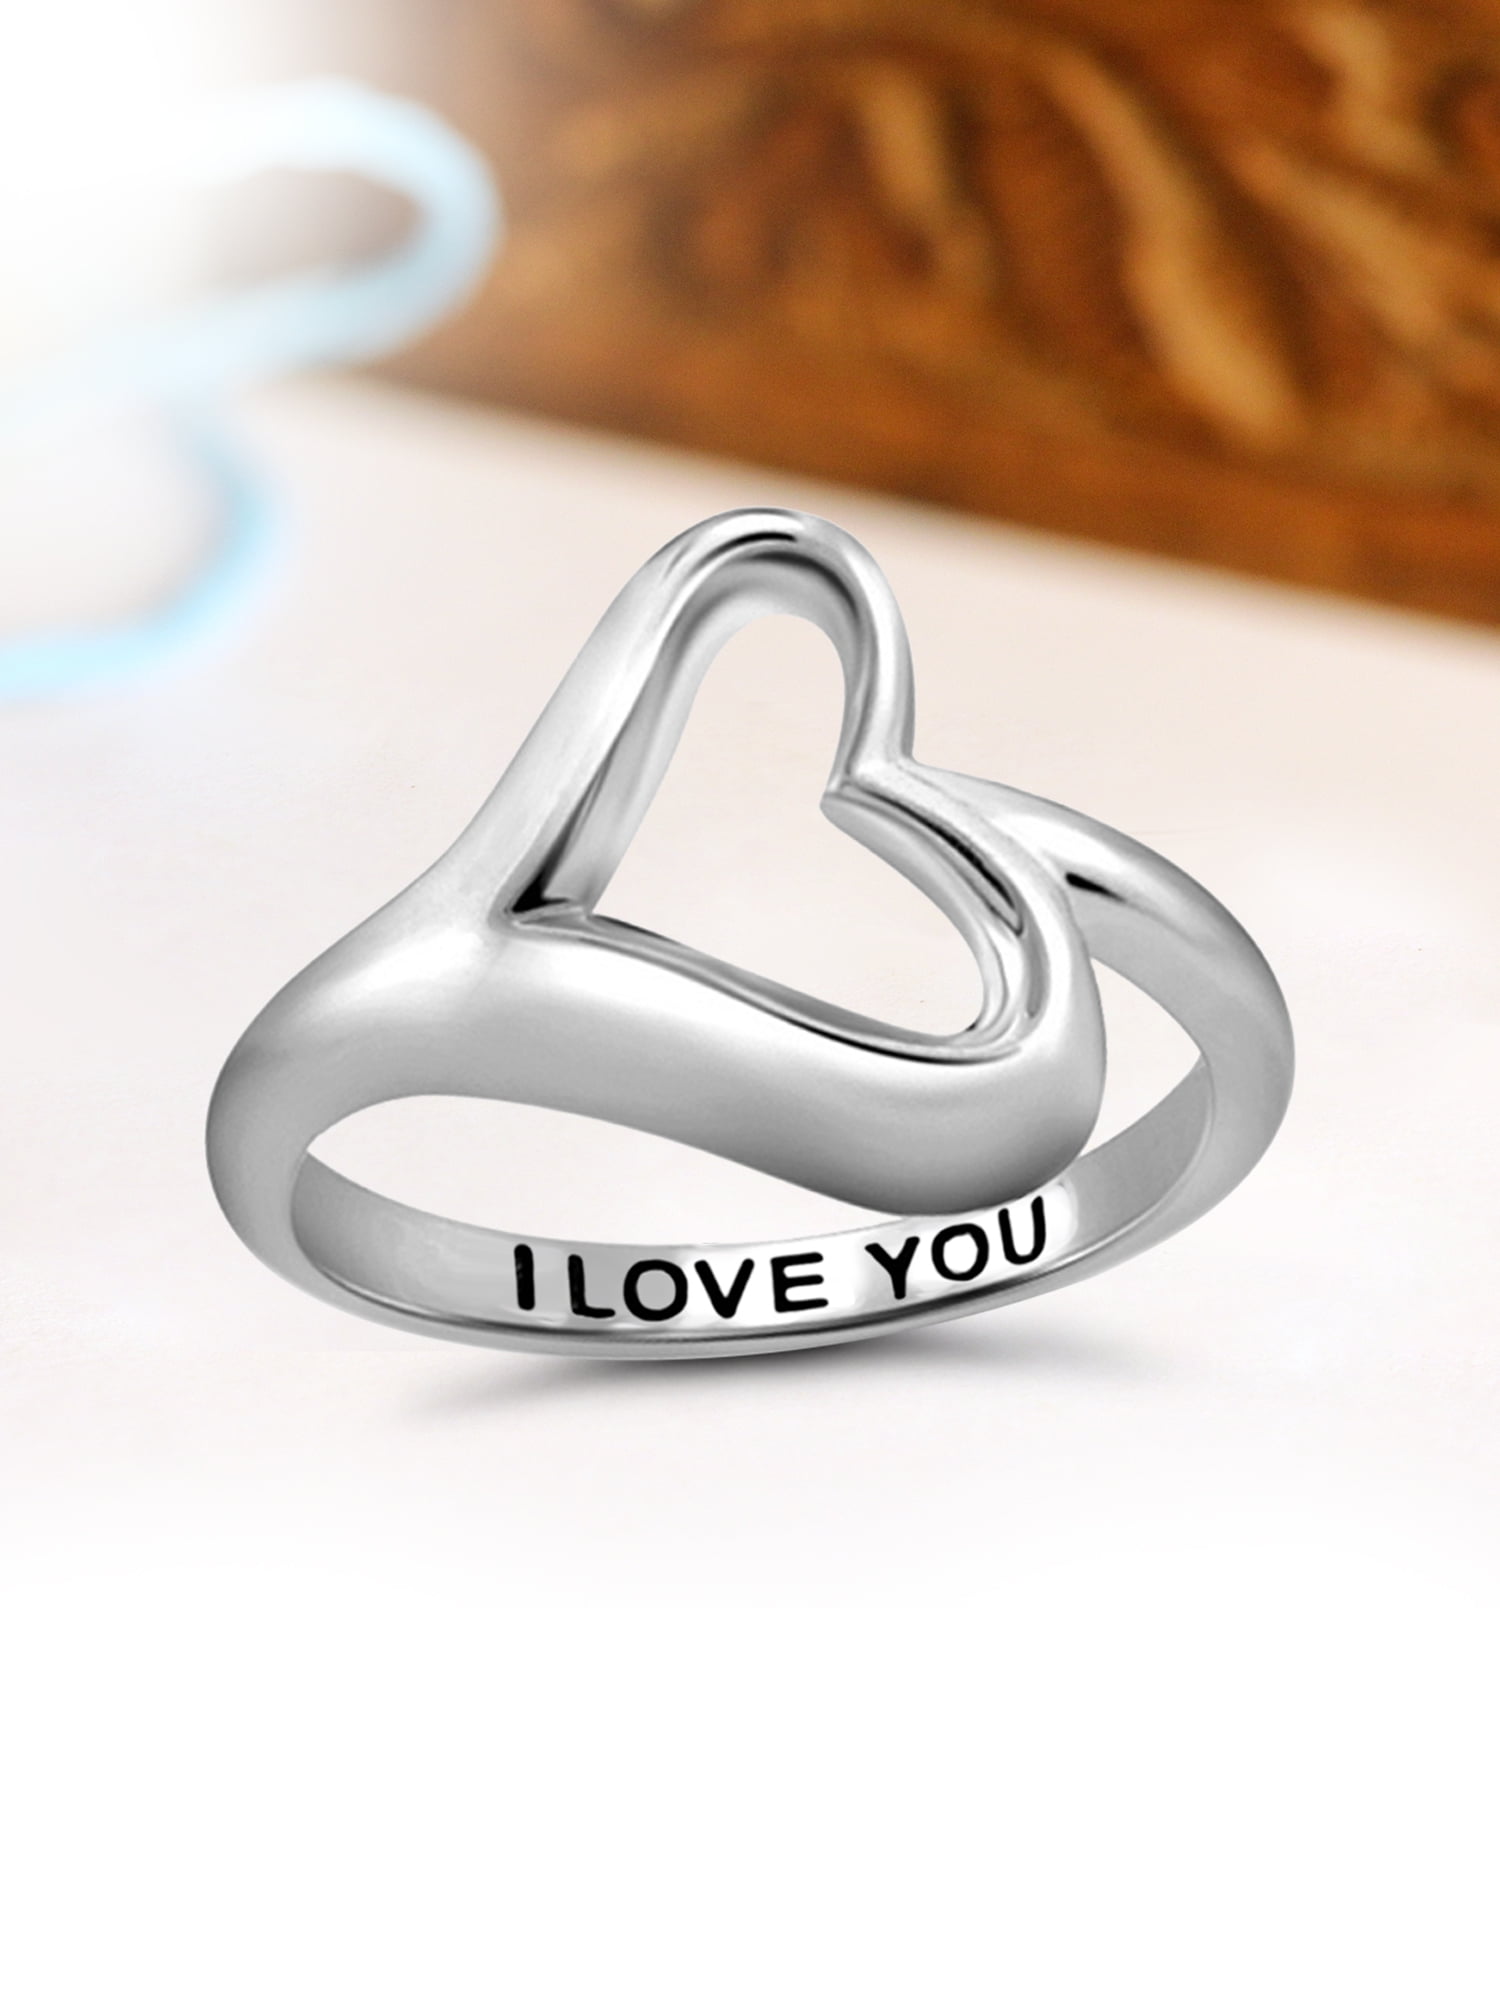 Urbana Heart Shaped Copper Plated single Adjustable Ring Reflecting I